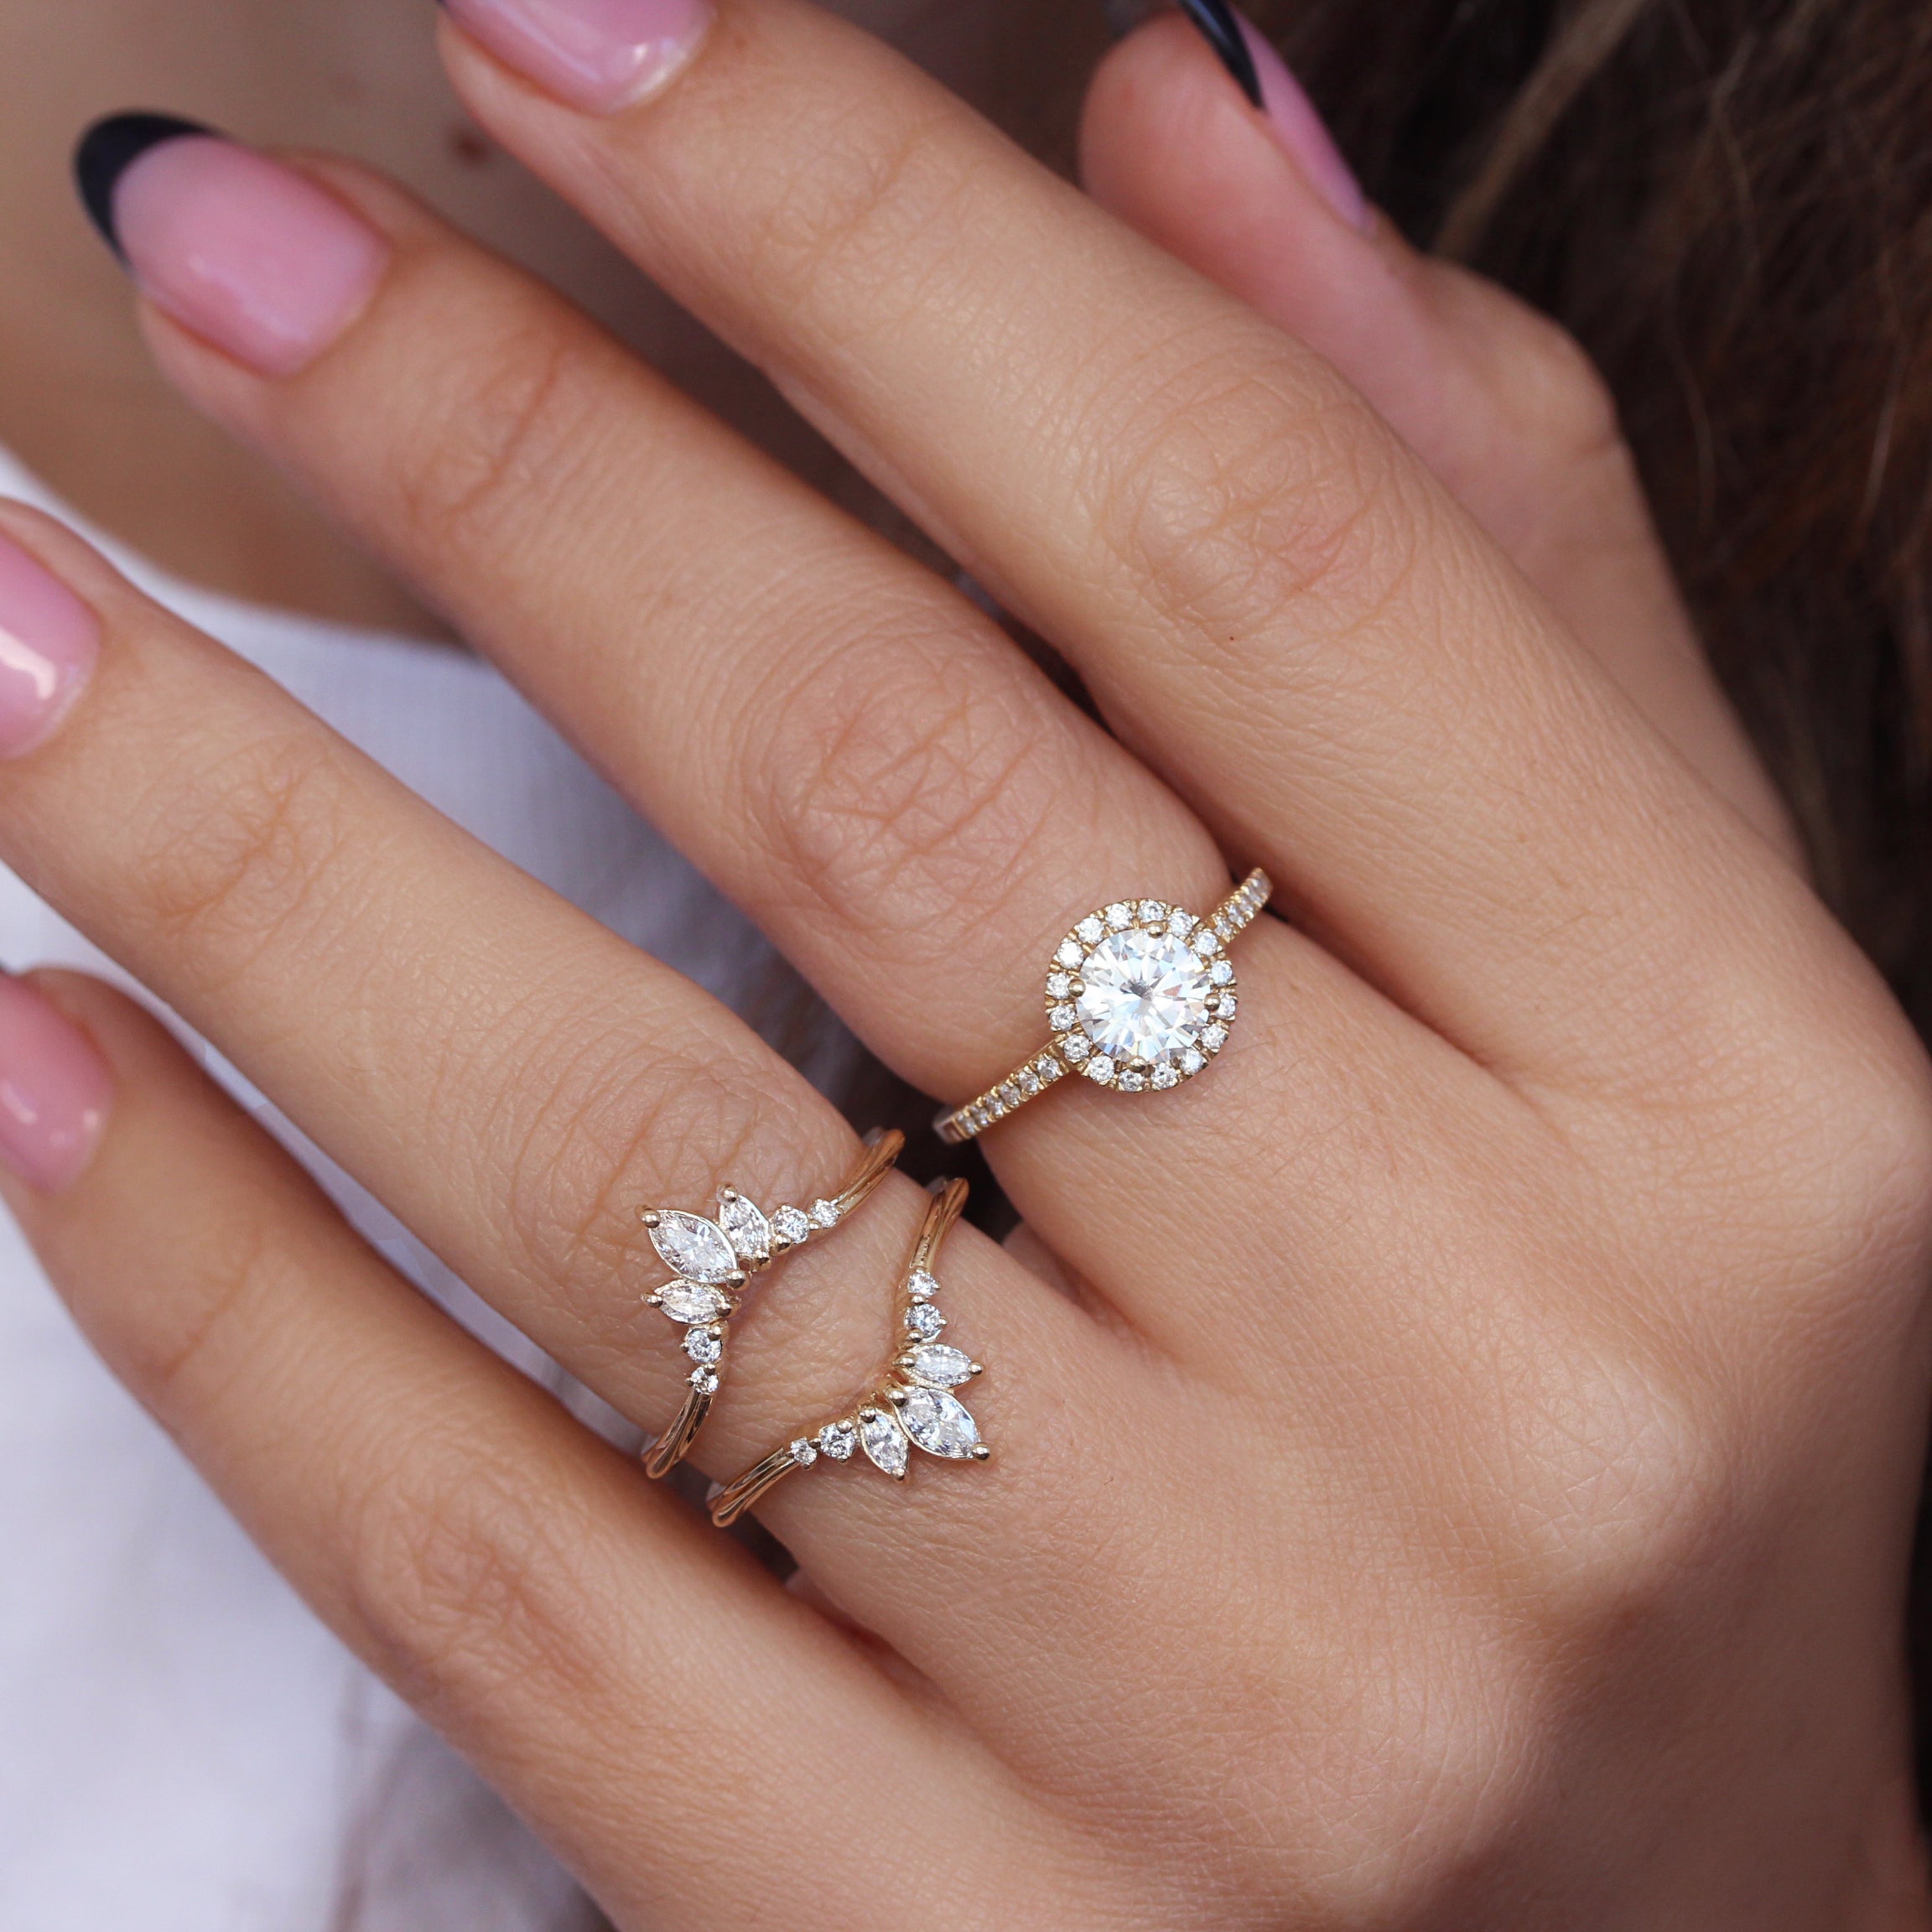 Round diamond halo engagement ring "Lady" & Diamond Ring Guard Enhancer "Danielle" - Bridal Two Ring Set